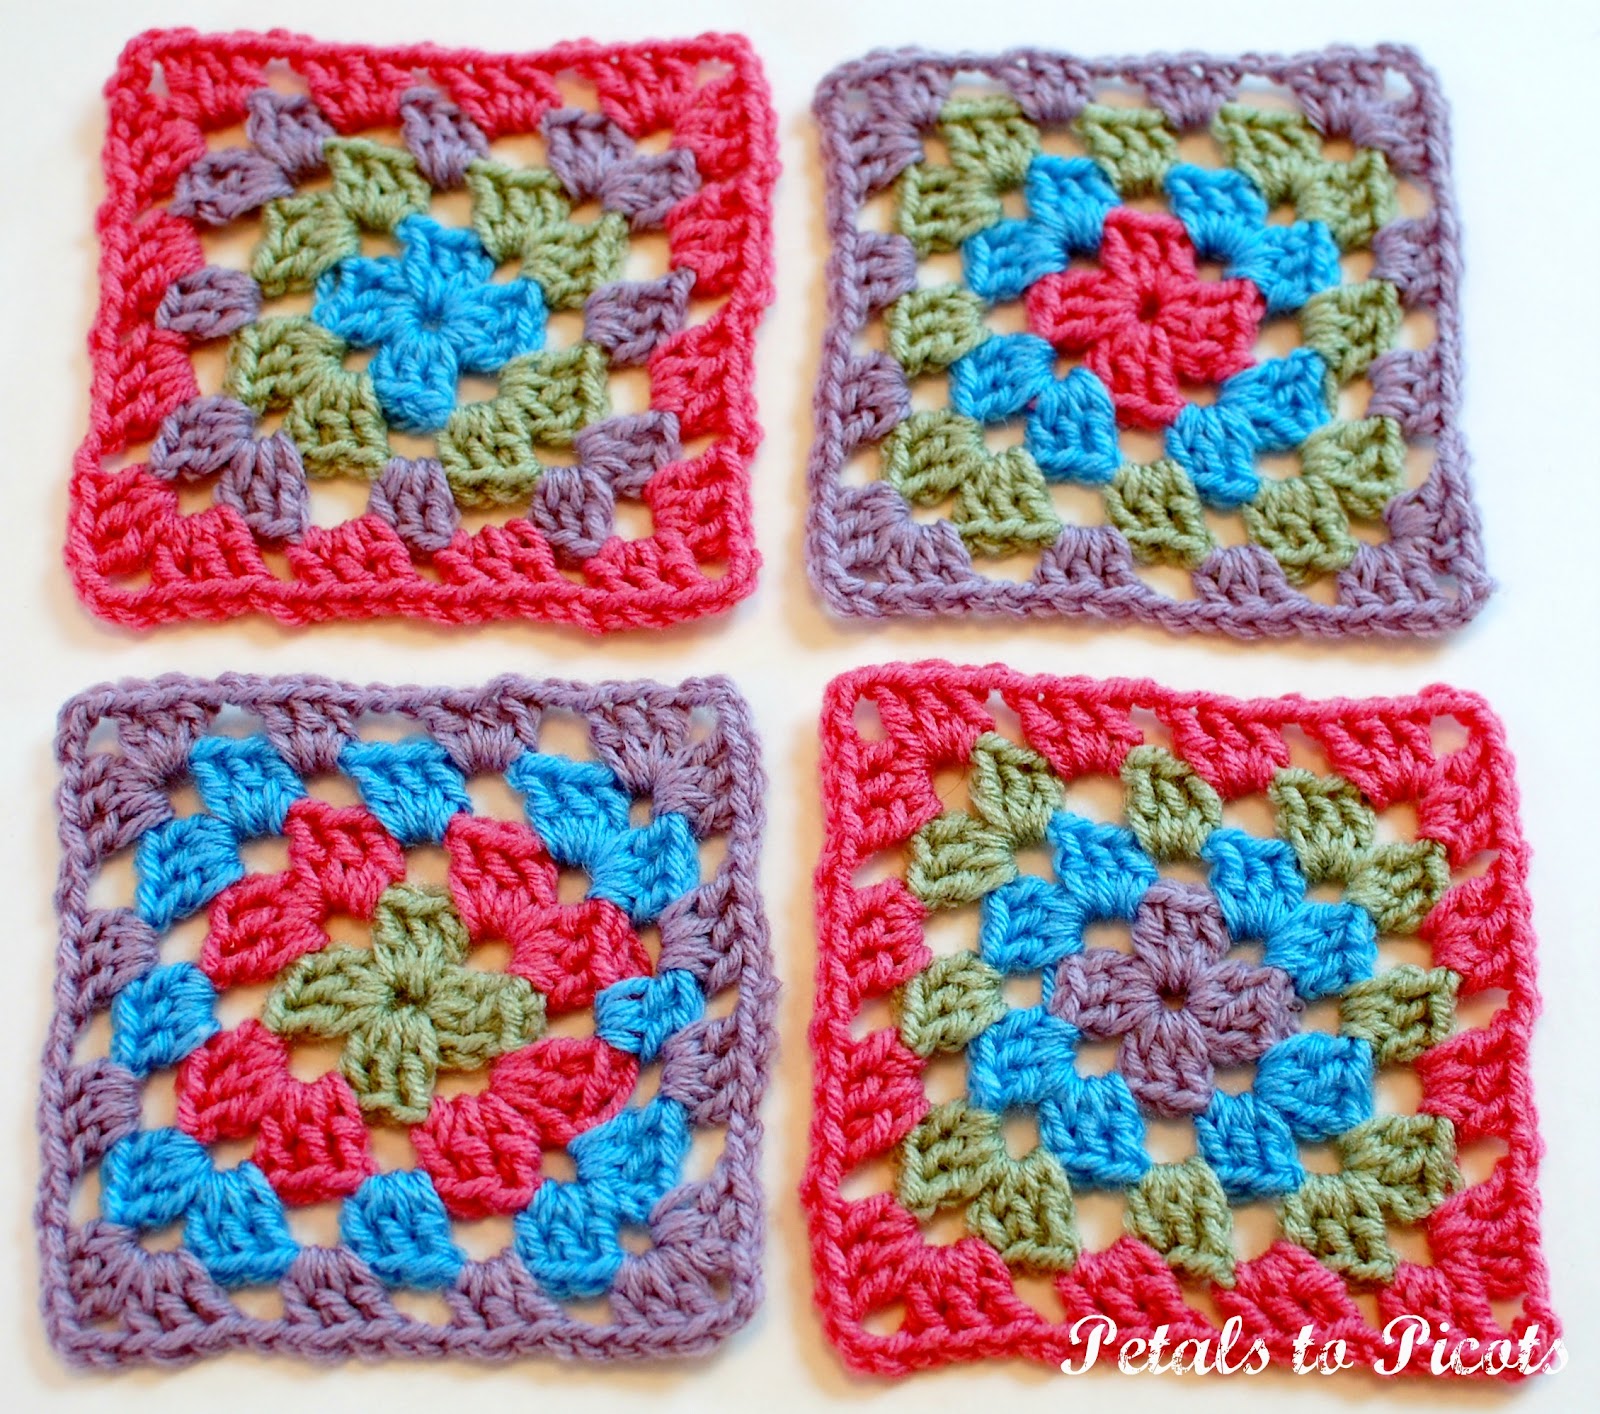 How to Crochet a Classic Granny Square: Granny Square Pattern | Petals